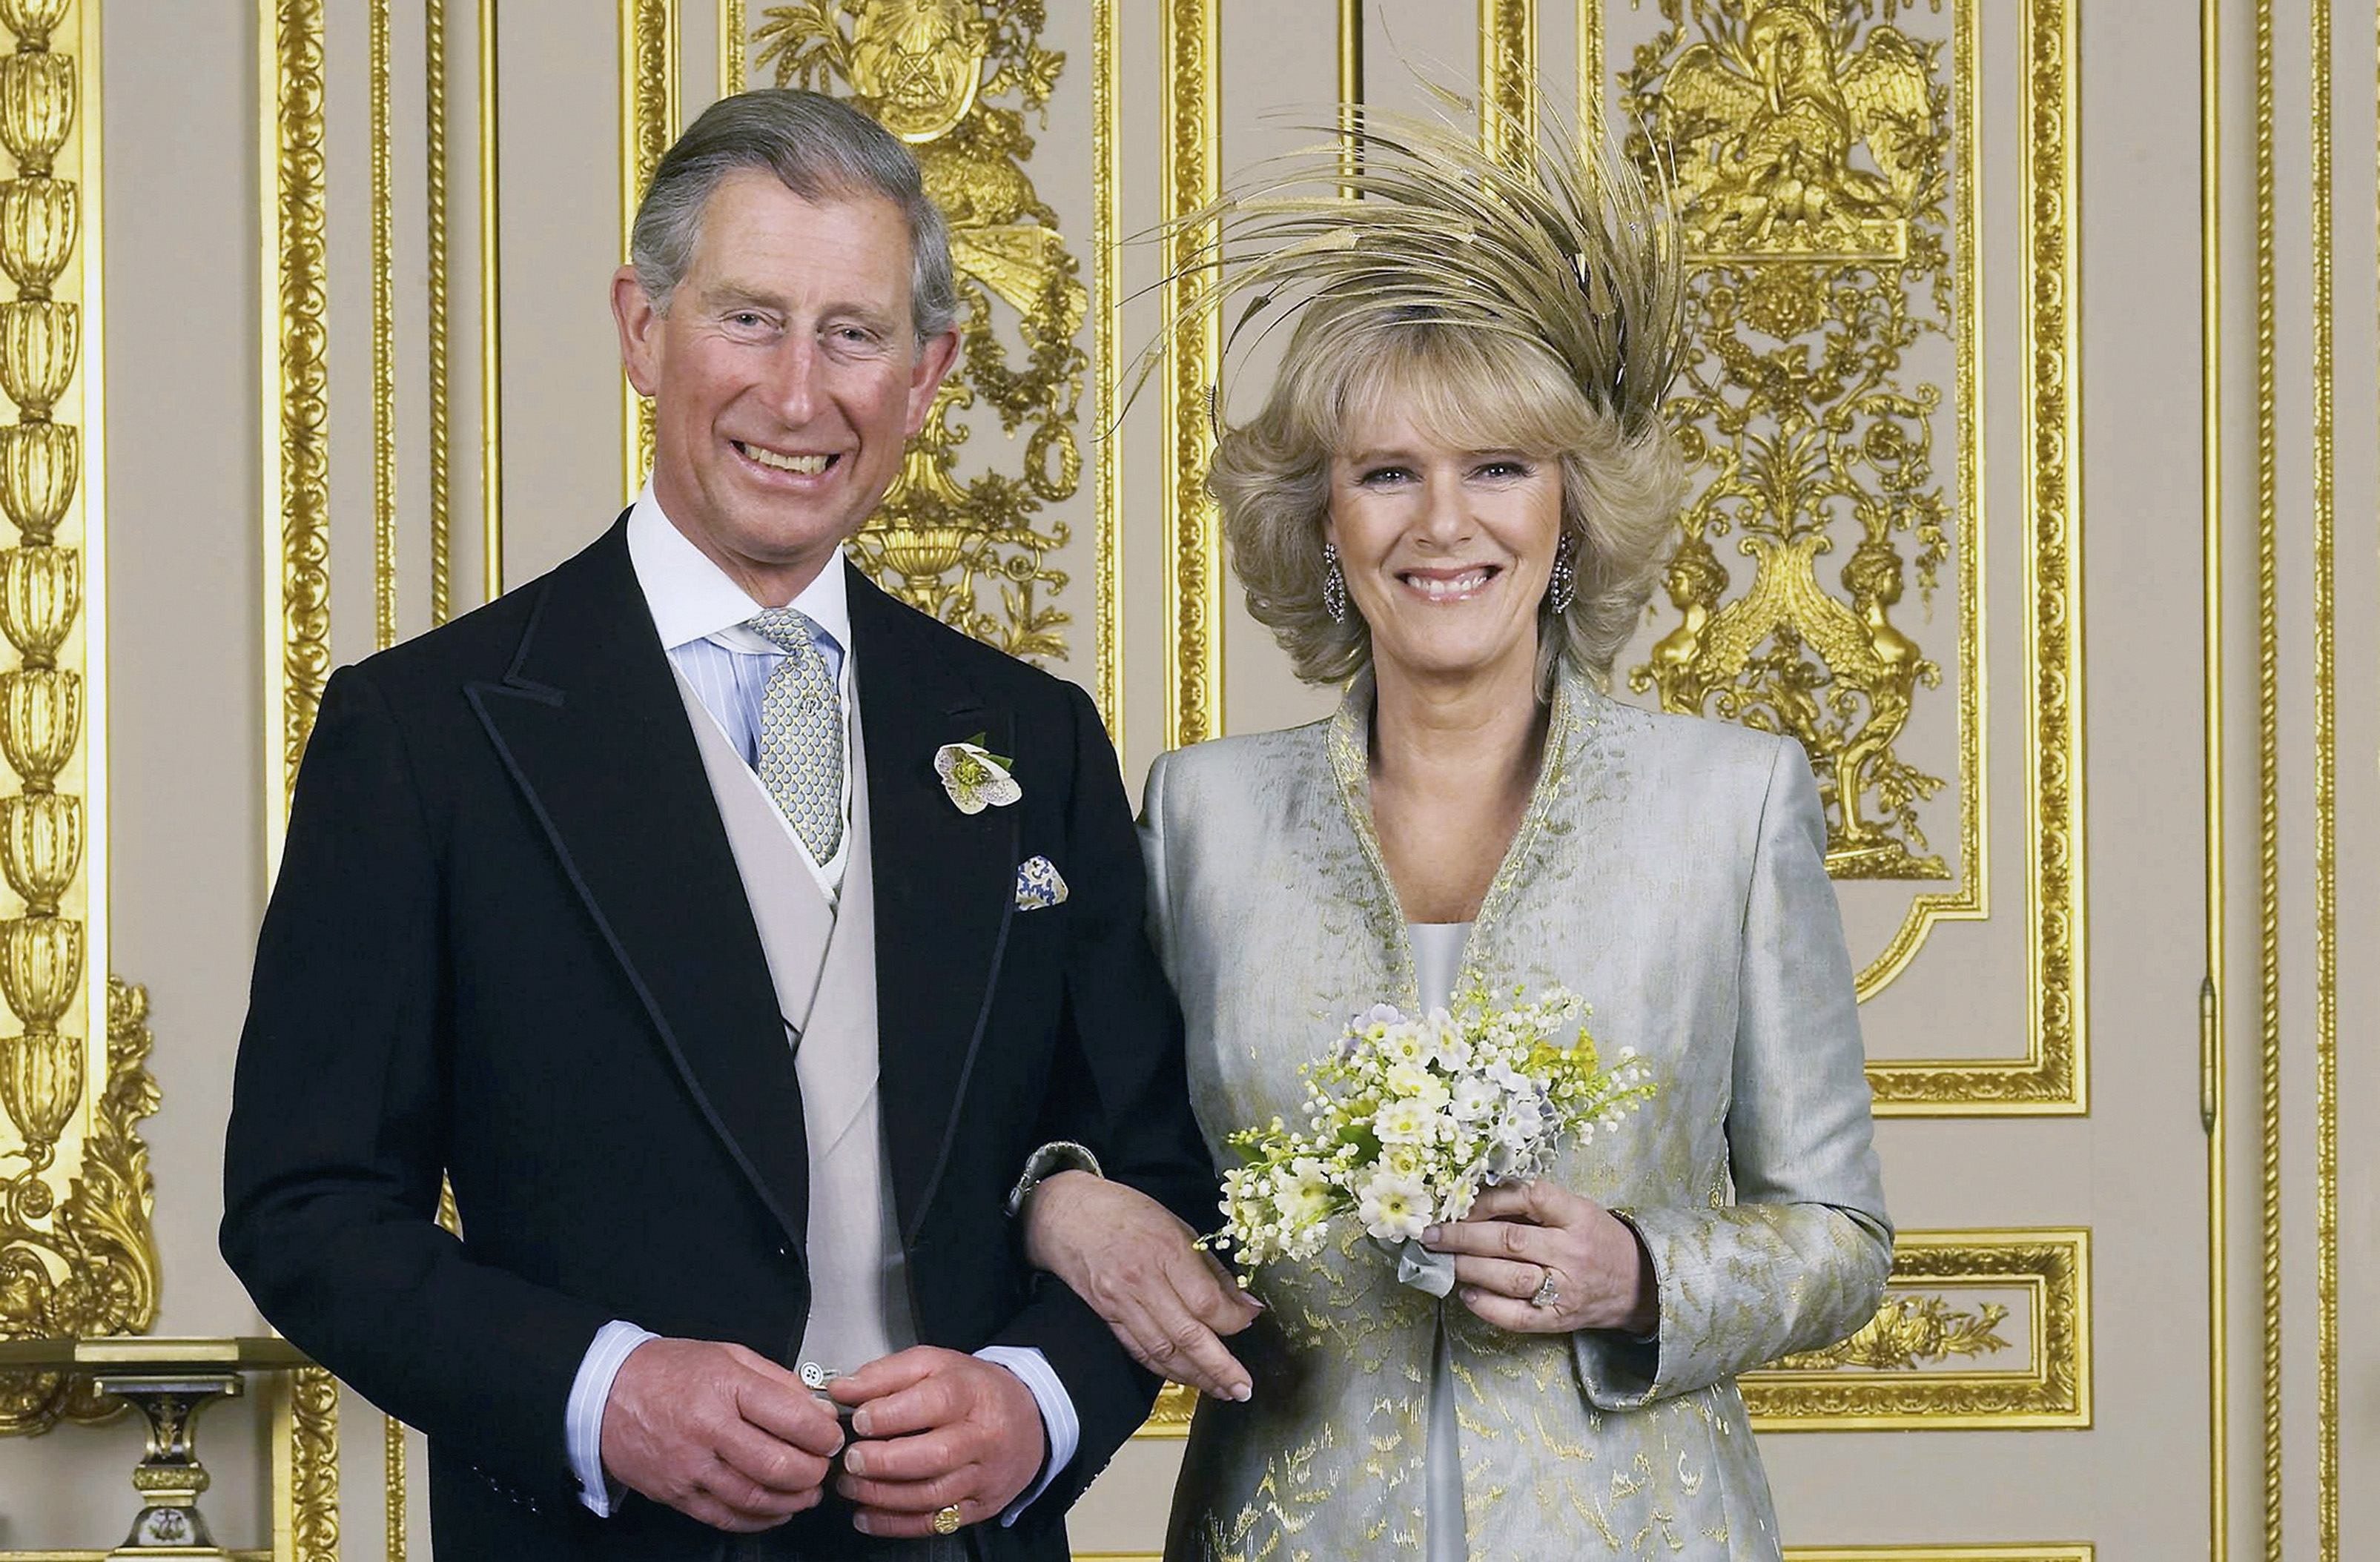 Prince Charles and Camilla Parker Bowles at their wedding